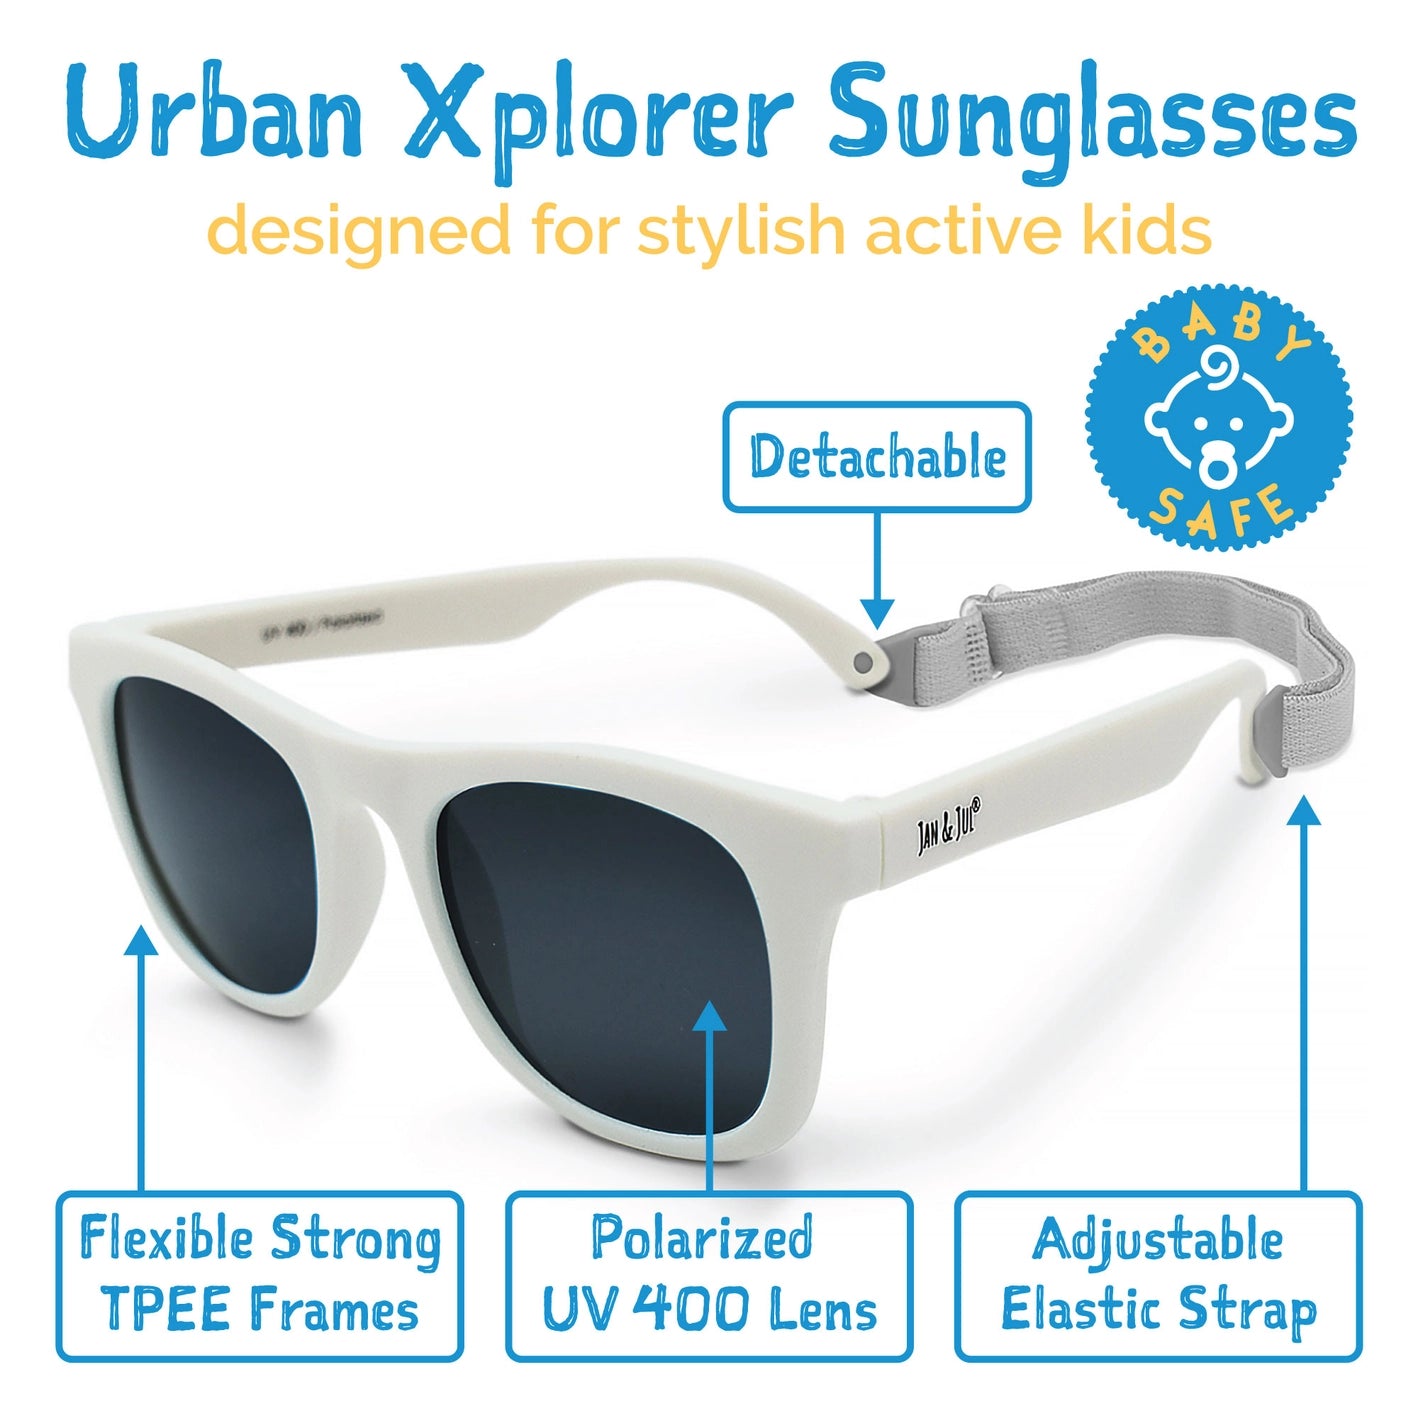 Jan & Jul - Urban Xplorer Sunglasses (6m-2y) - Black